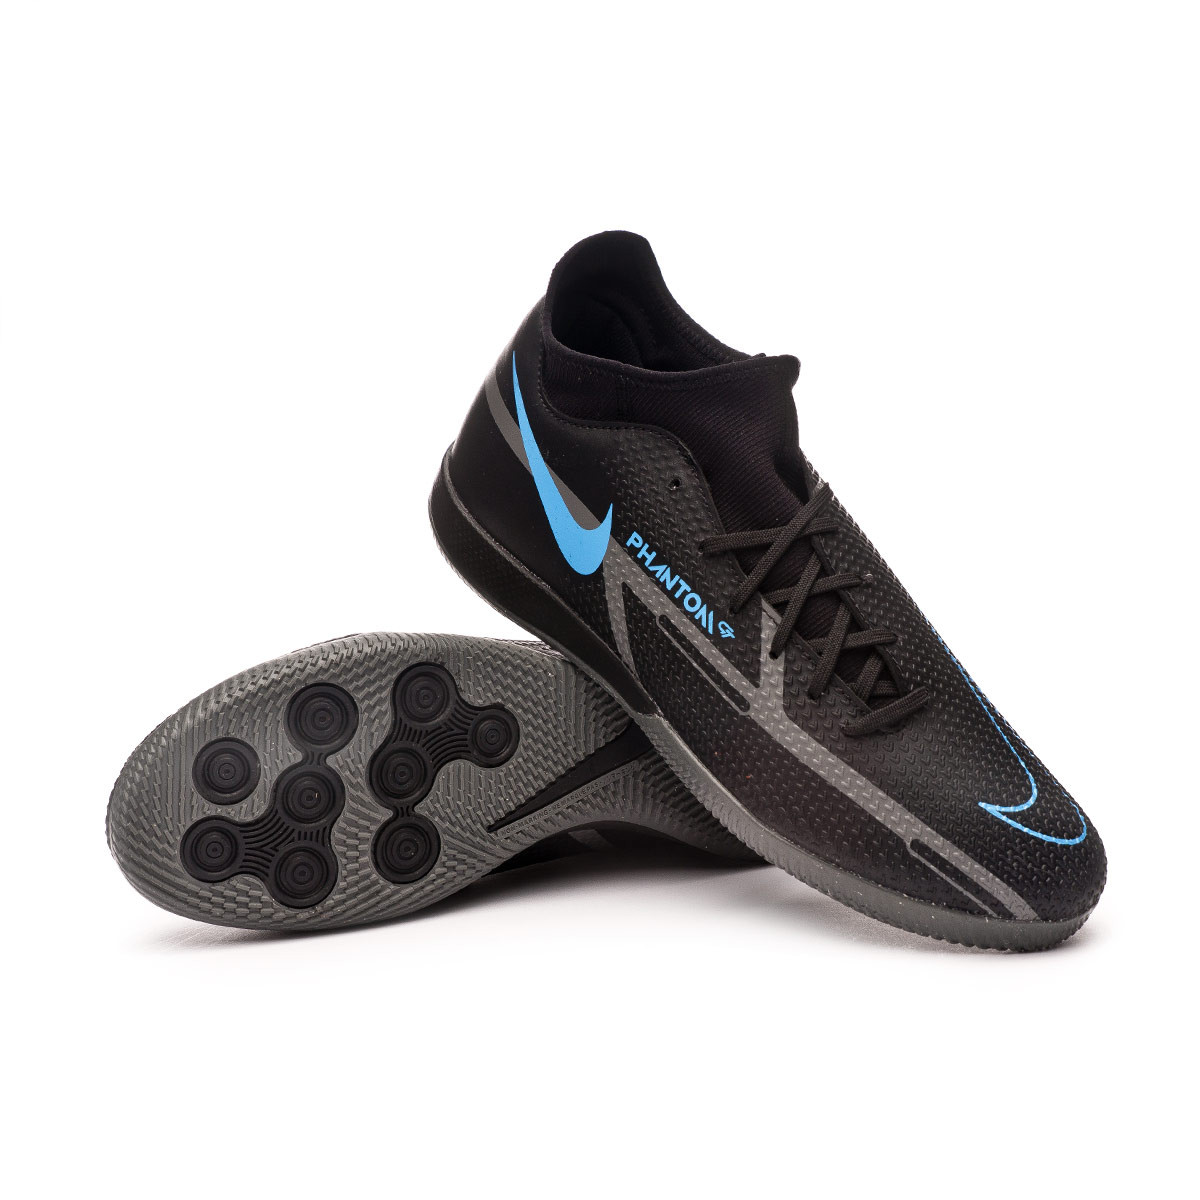 Zapatilla de Fútbol sala Nike GT2 Academy IC Black-Iron Grey-University Blue - Fútbol